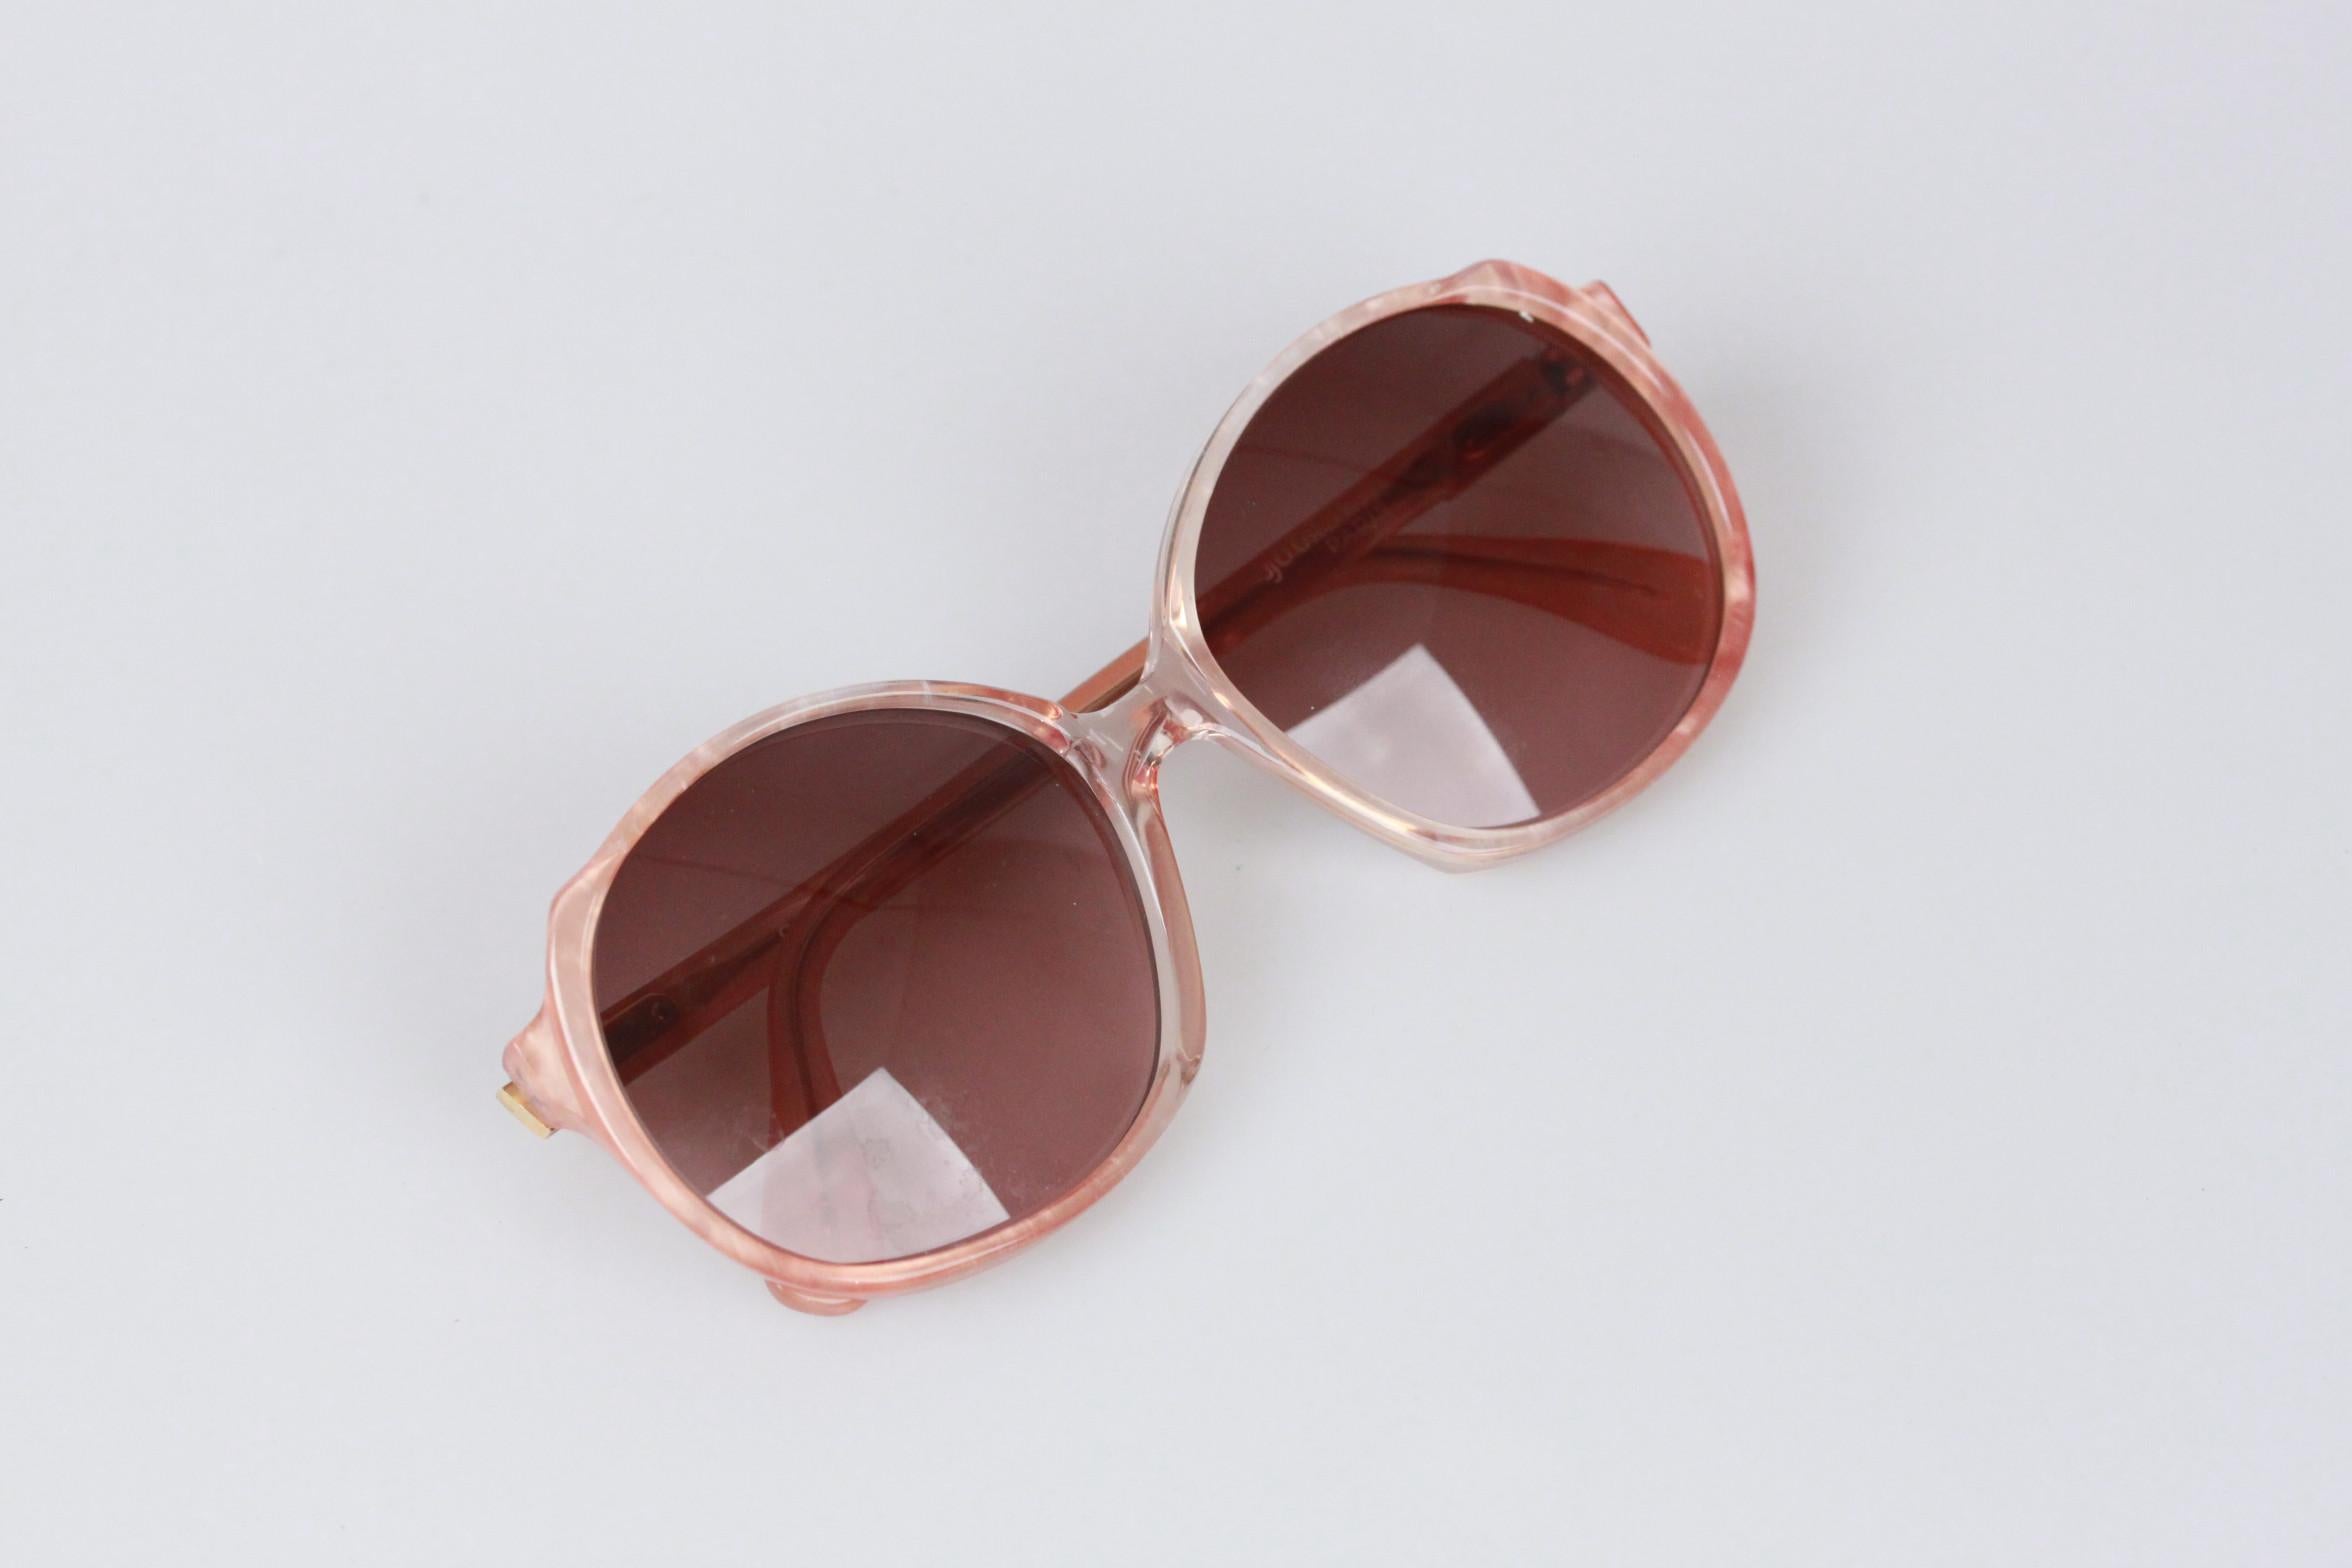 J Jourdan Paris Vintage Powder Pink Sunglasses 0C136 New Old Stock 2